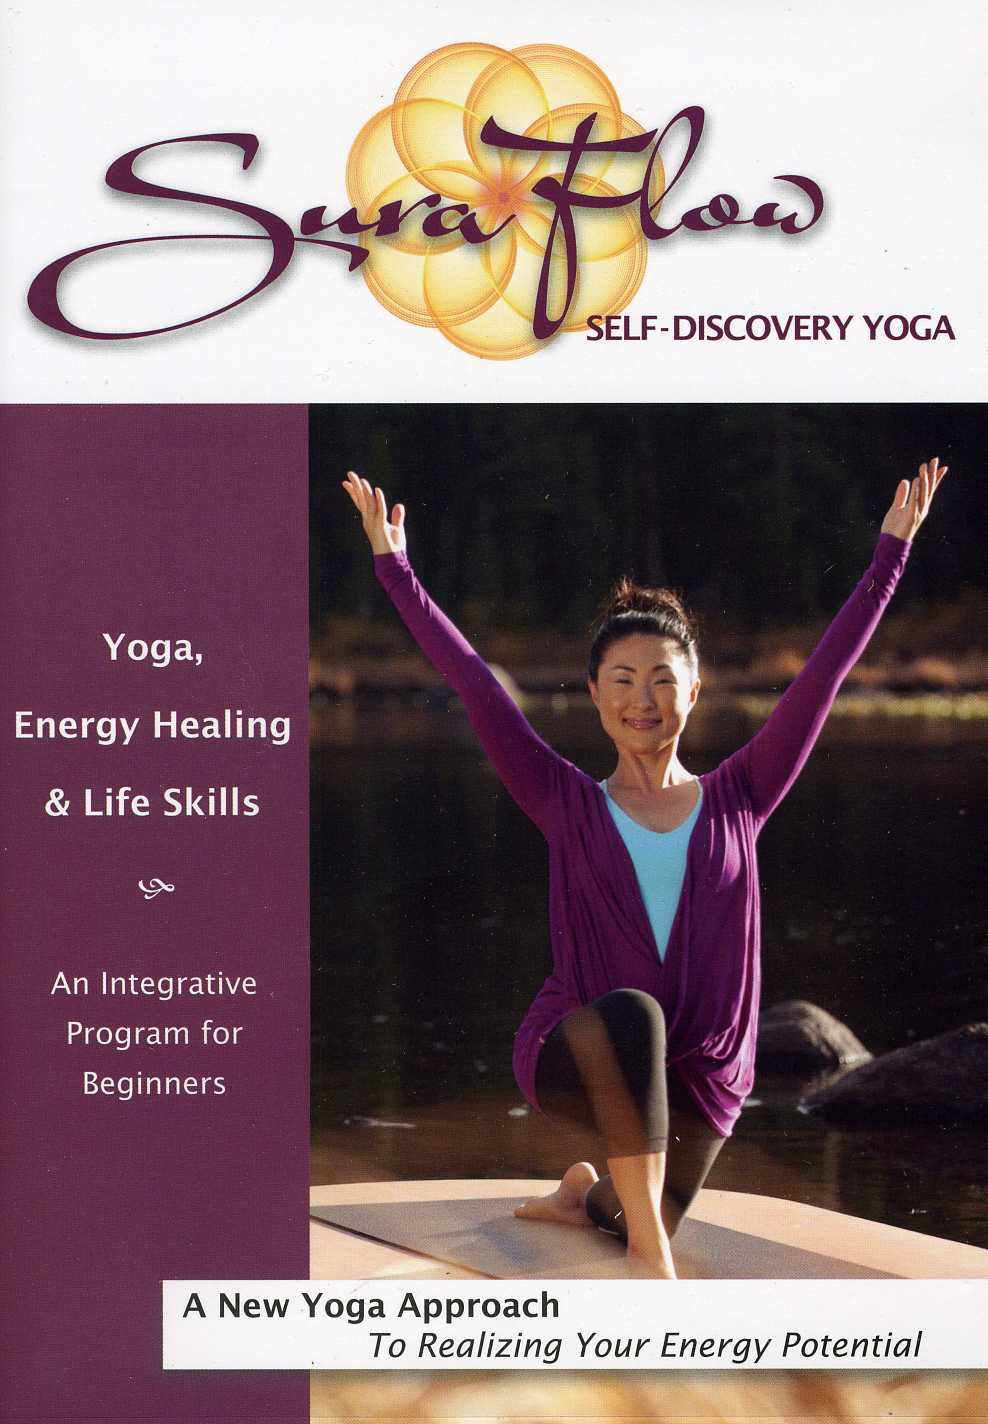 SURA FLOW YOGA: YOGA ENERGY HEALING & LIFE SKILLS